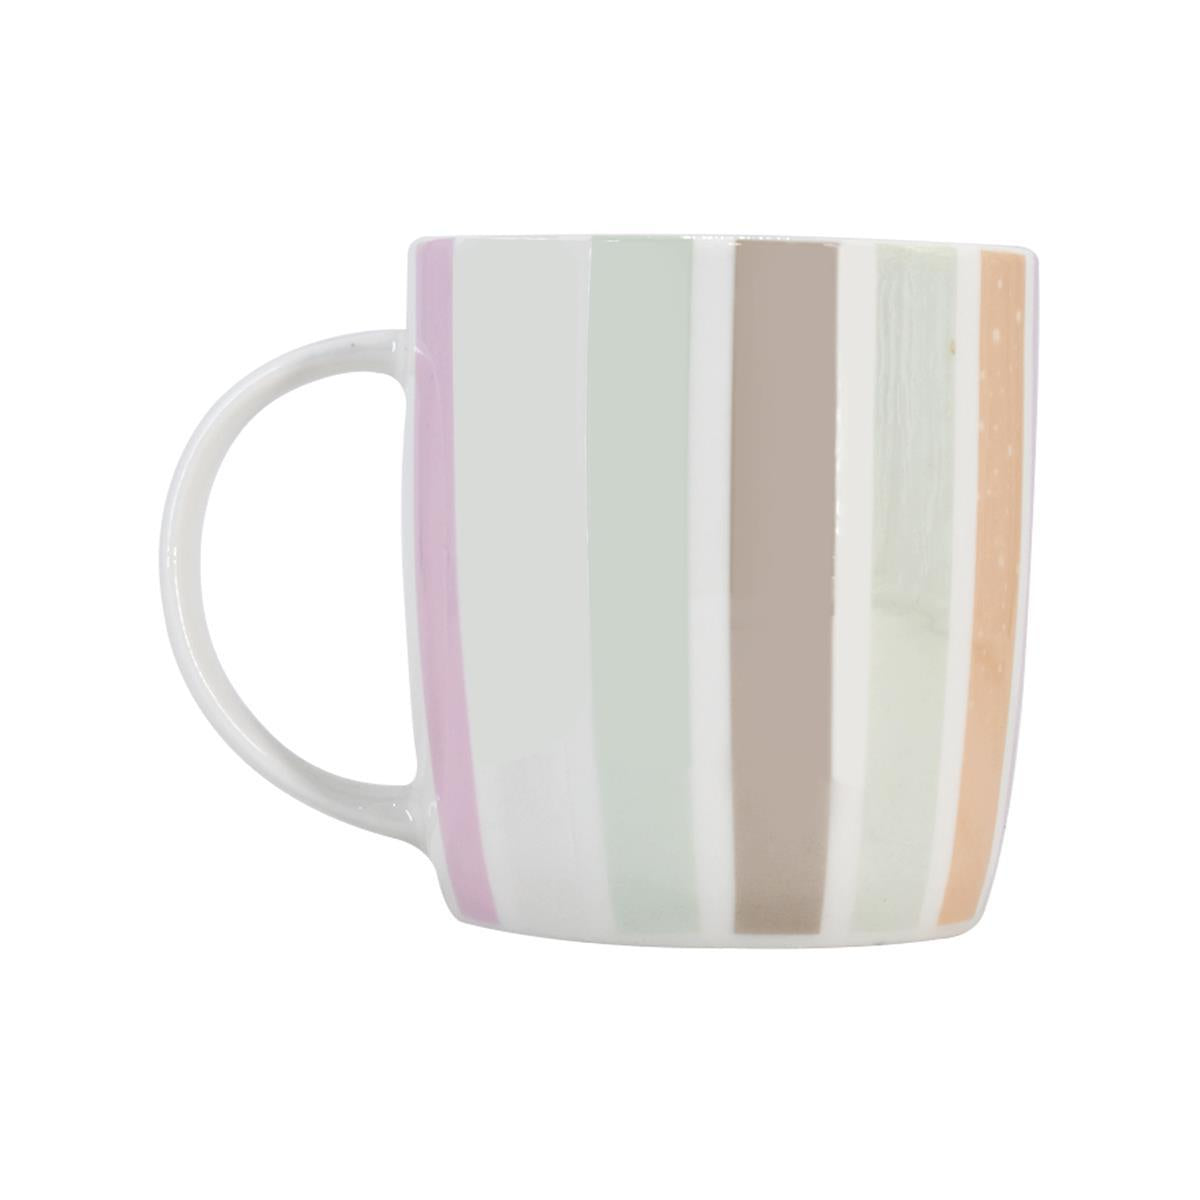 Ceramic Coffee or Tea Mug with handle - 325ml (BPM3758-D)